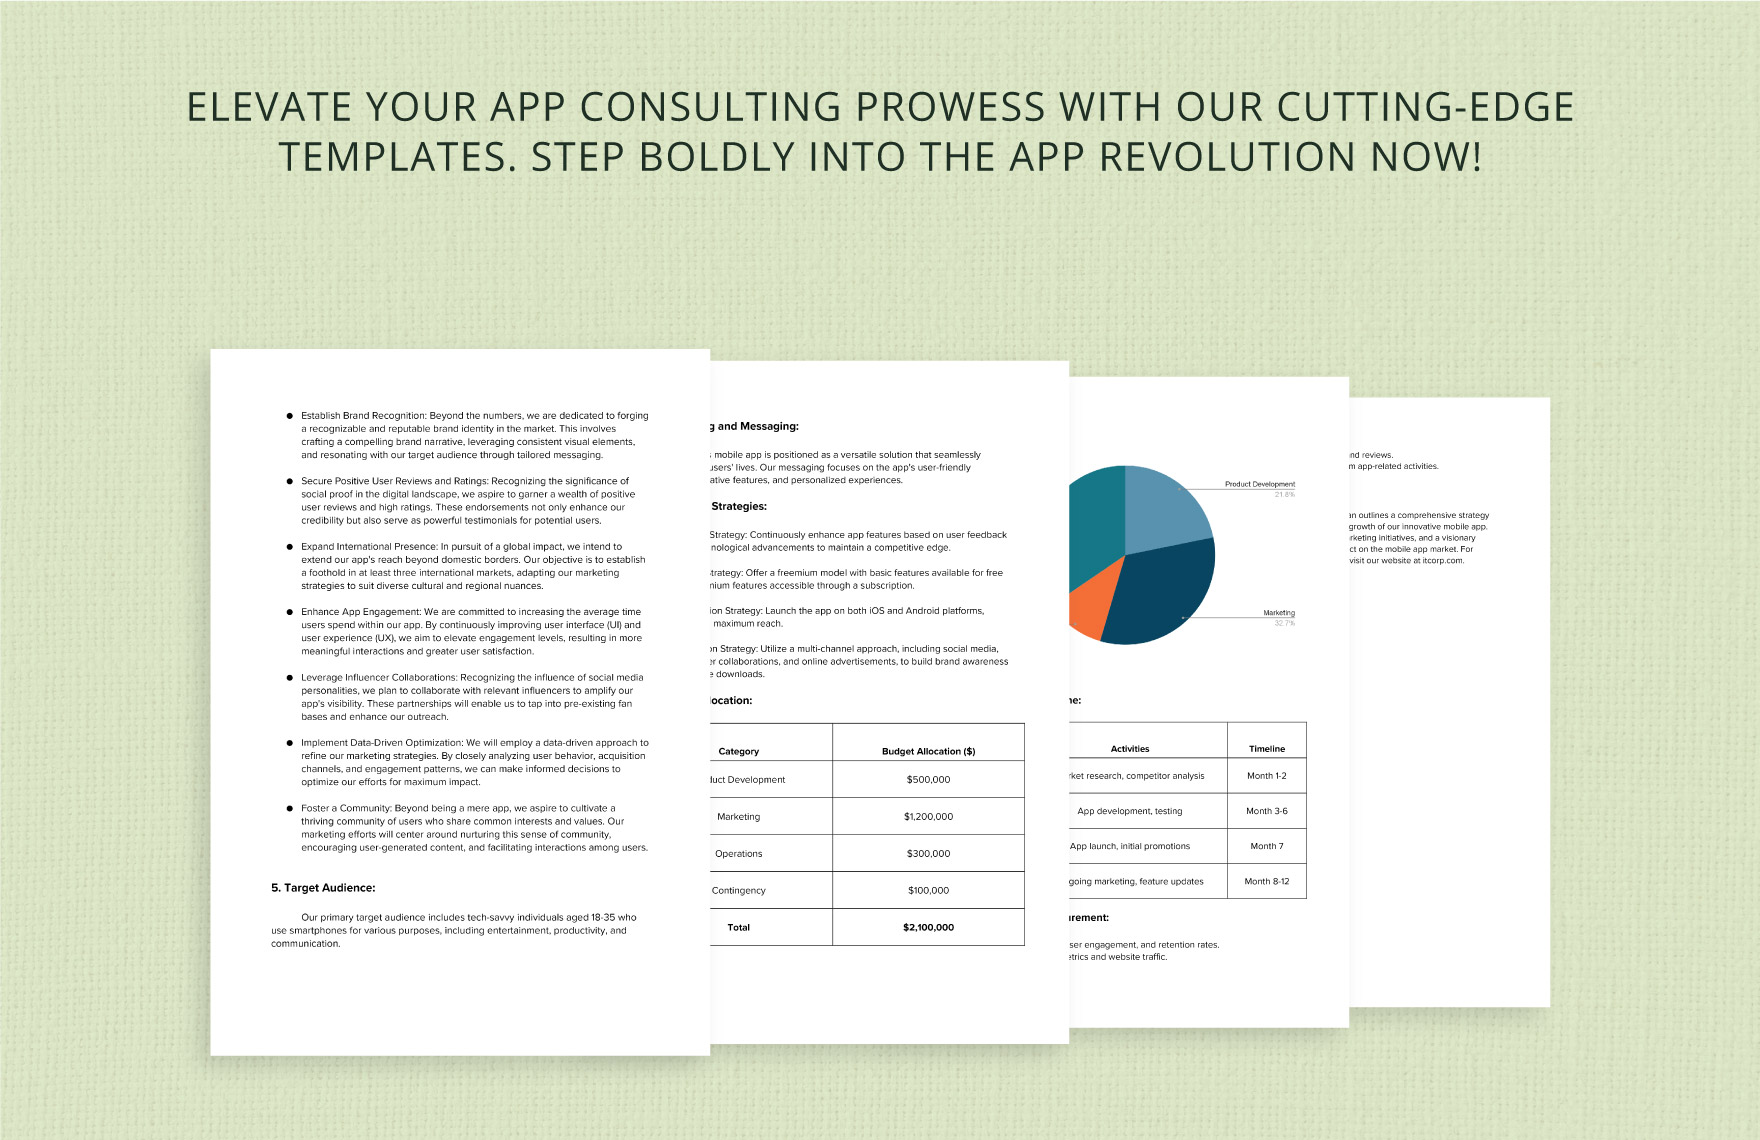 IT Mobile App Marketing Plan Template in Word PDF Google Docs